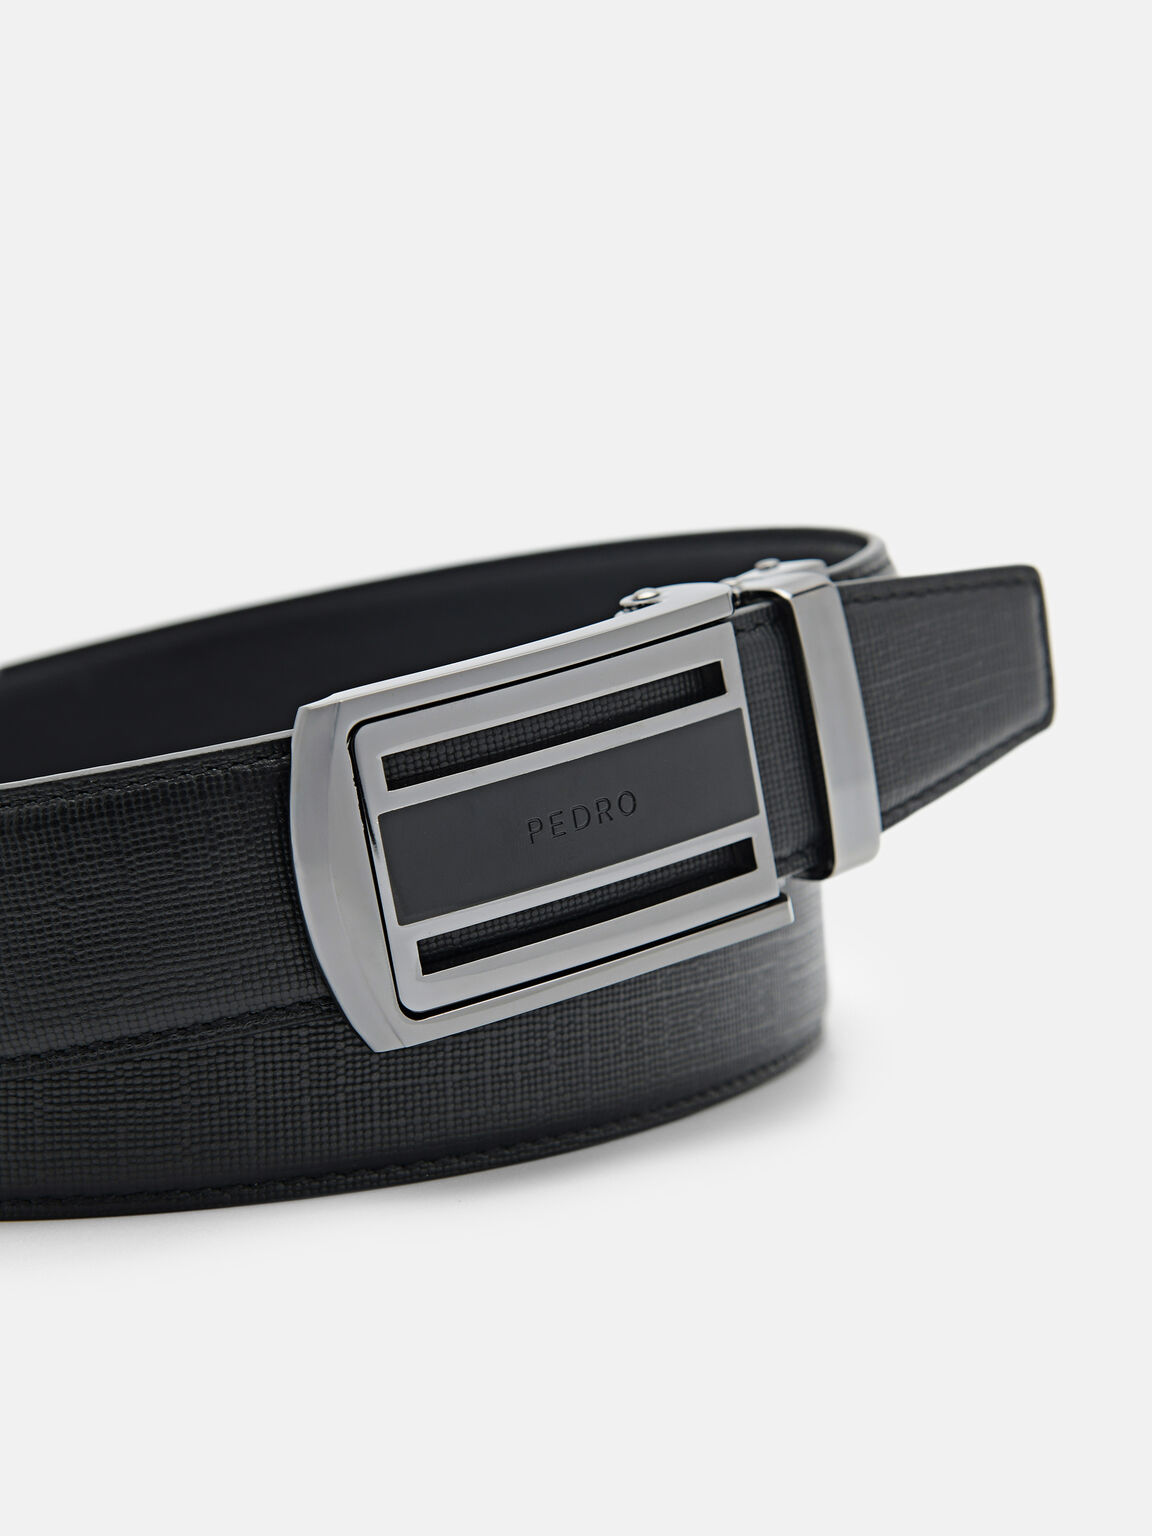 Embossed Leather Automatic Belt, Black, hi-res